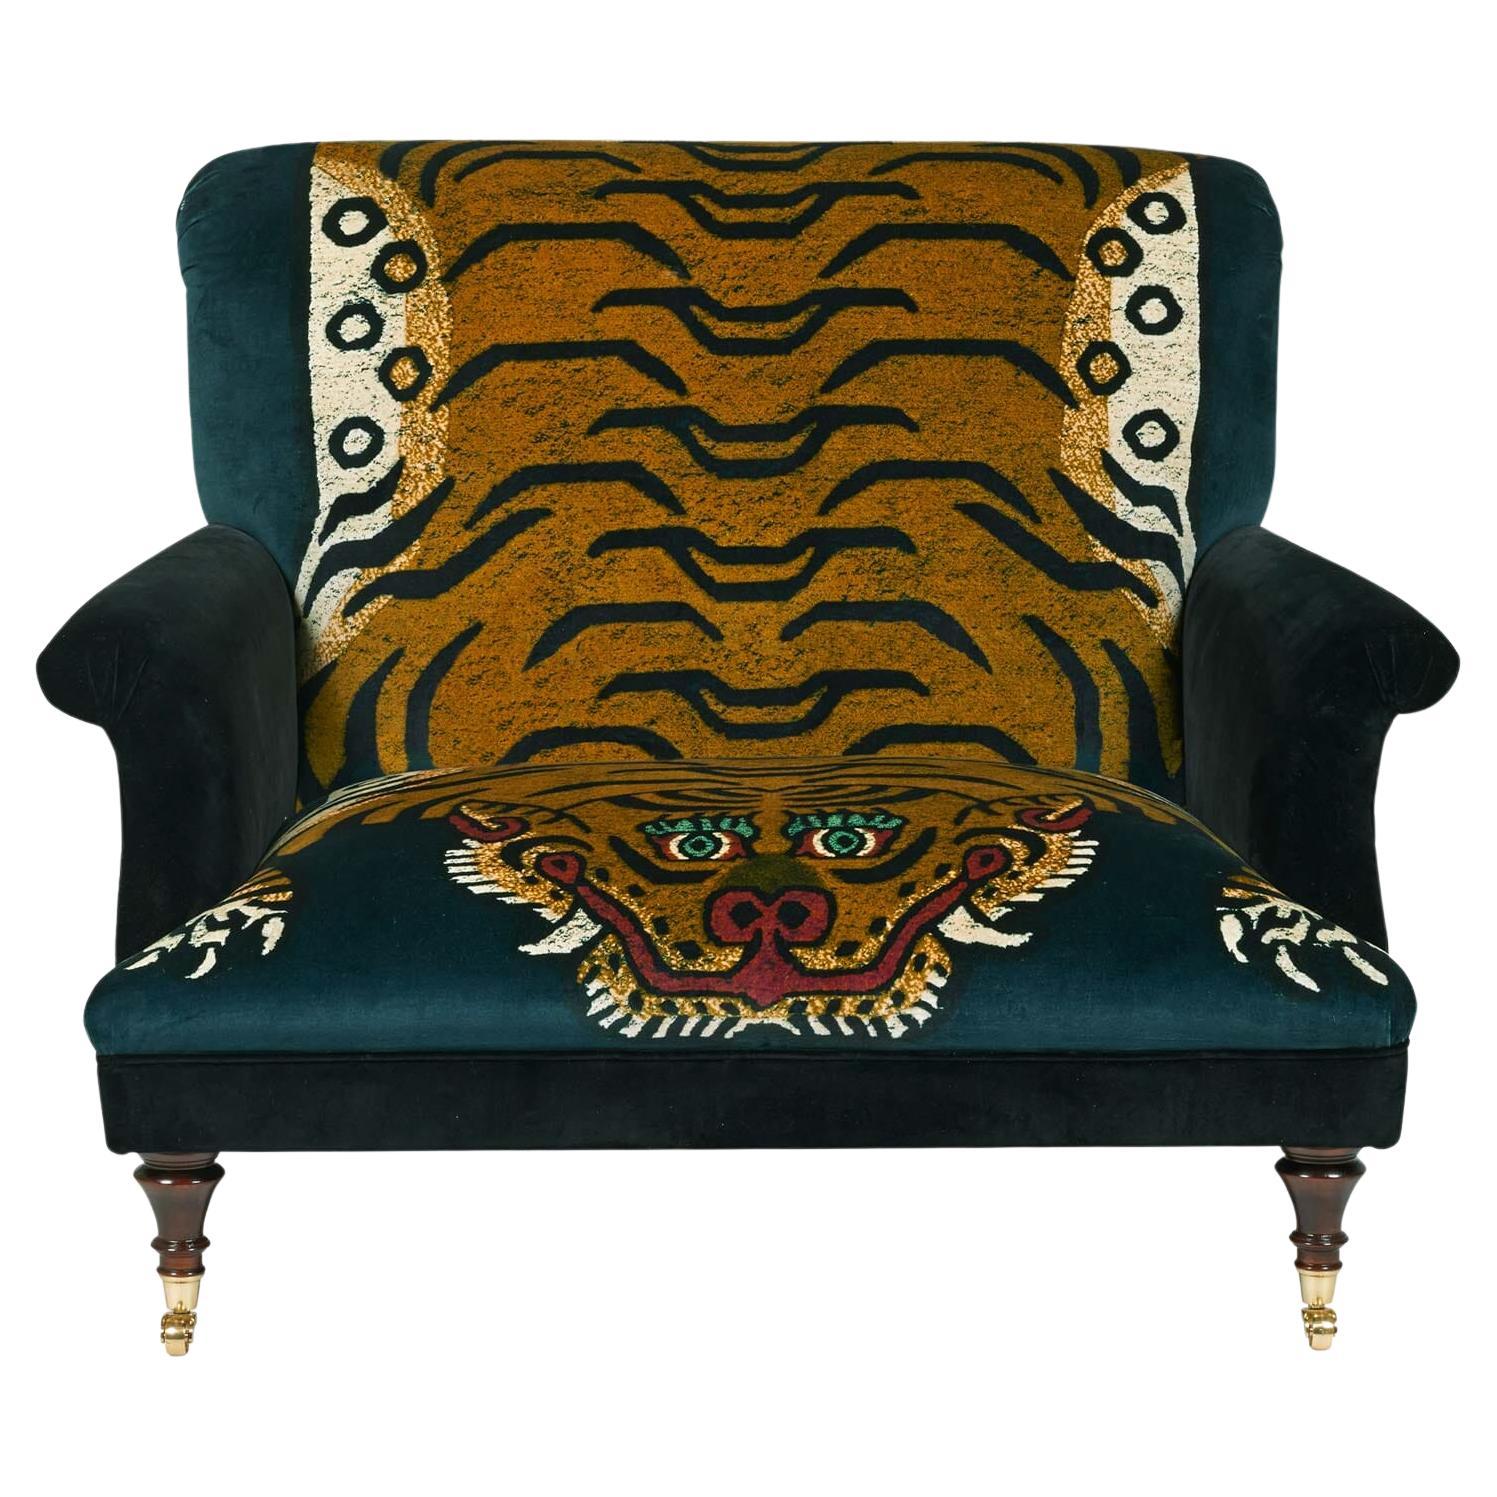 BLOOMSBURY Velvet Chair - SABER LOVE SEAT For Sale